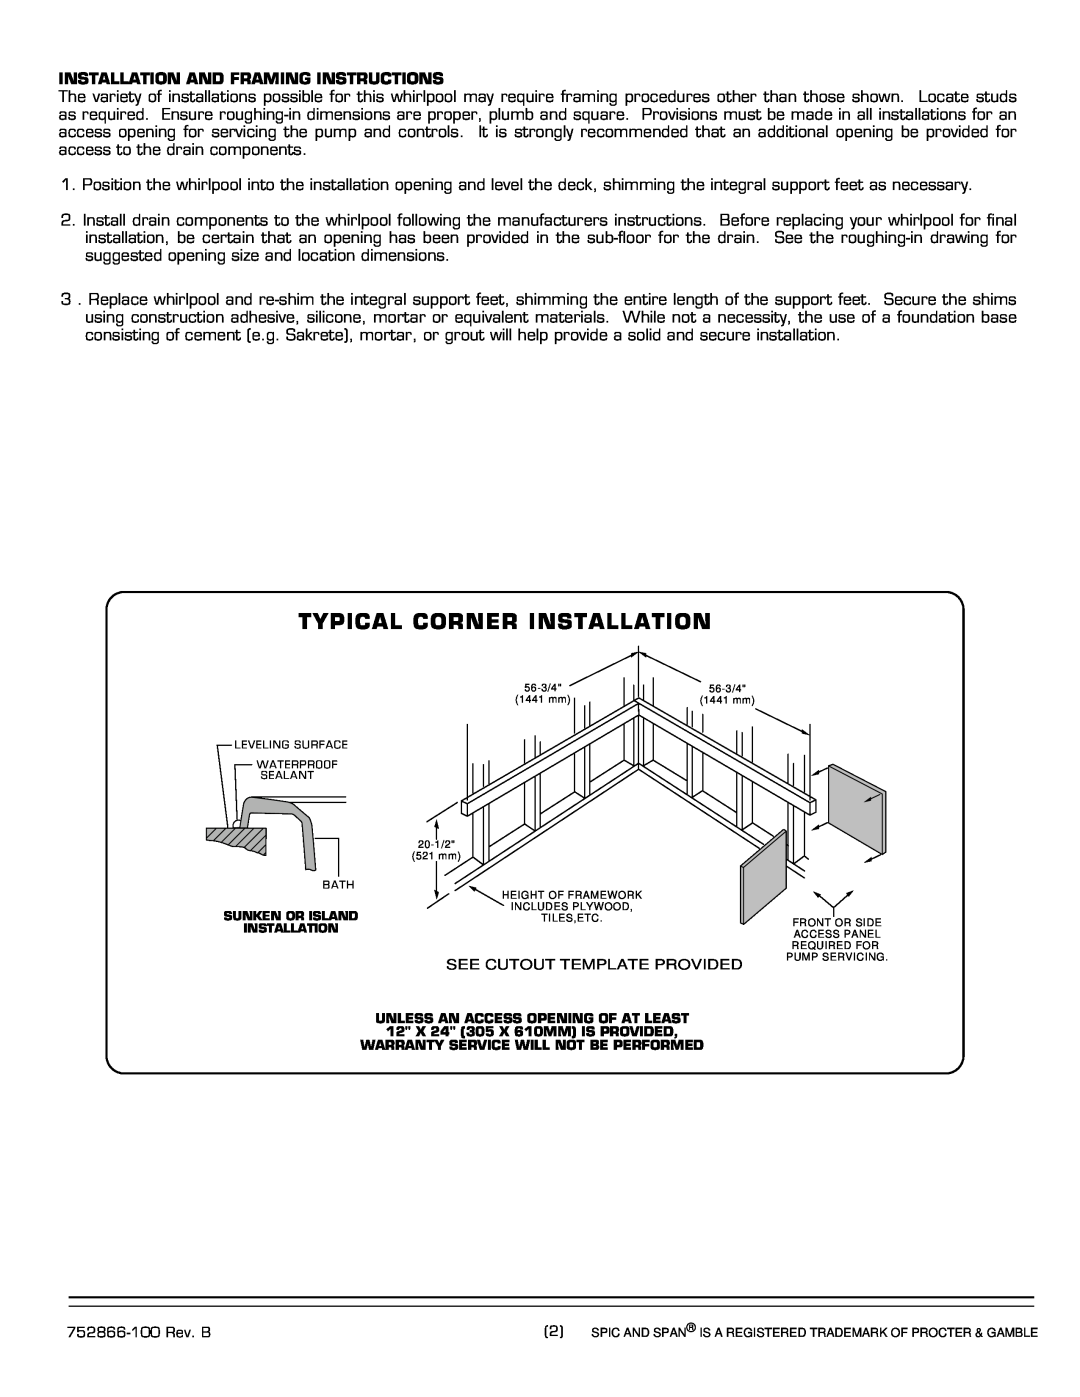 American Standard 2902E installation instructions Typical Corner Installation, Installation And Framing Instructions 